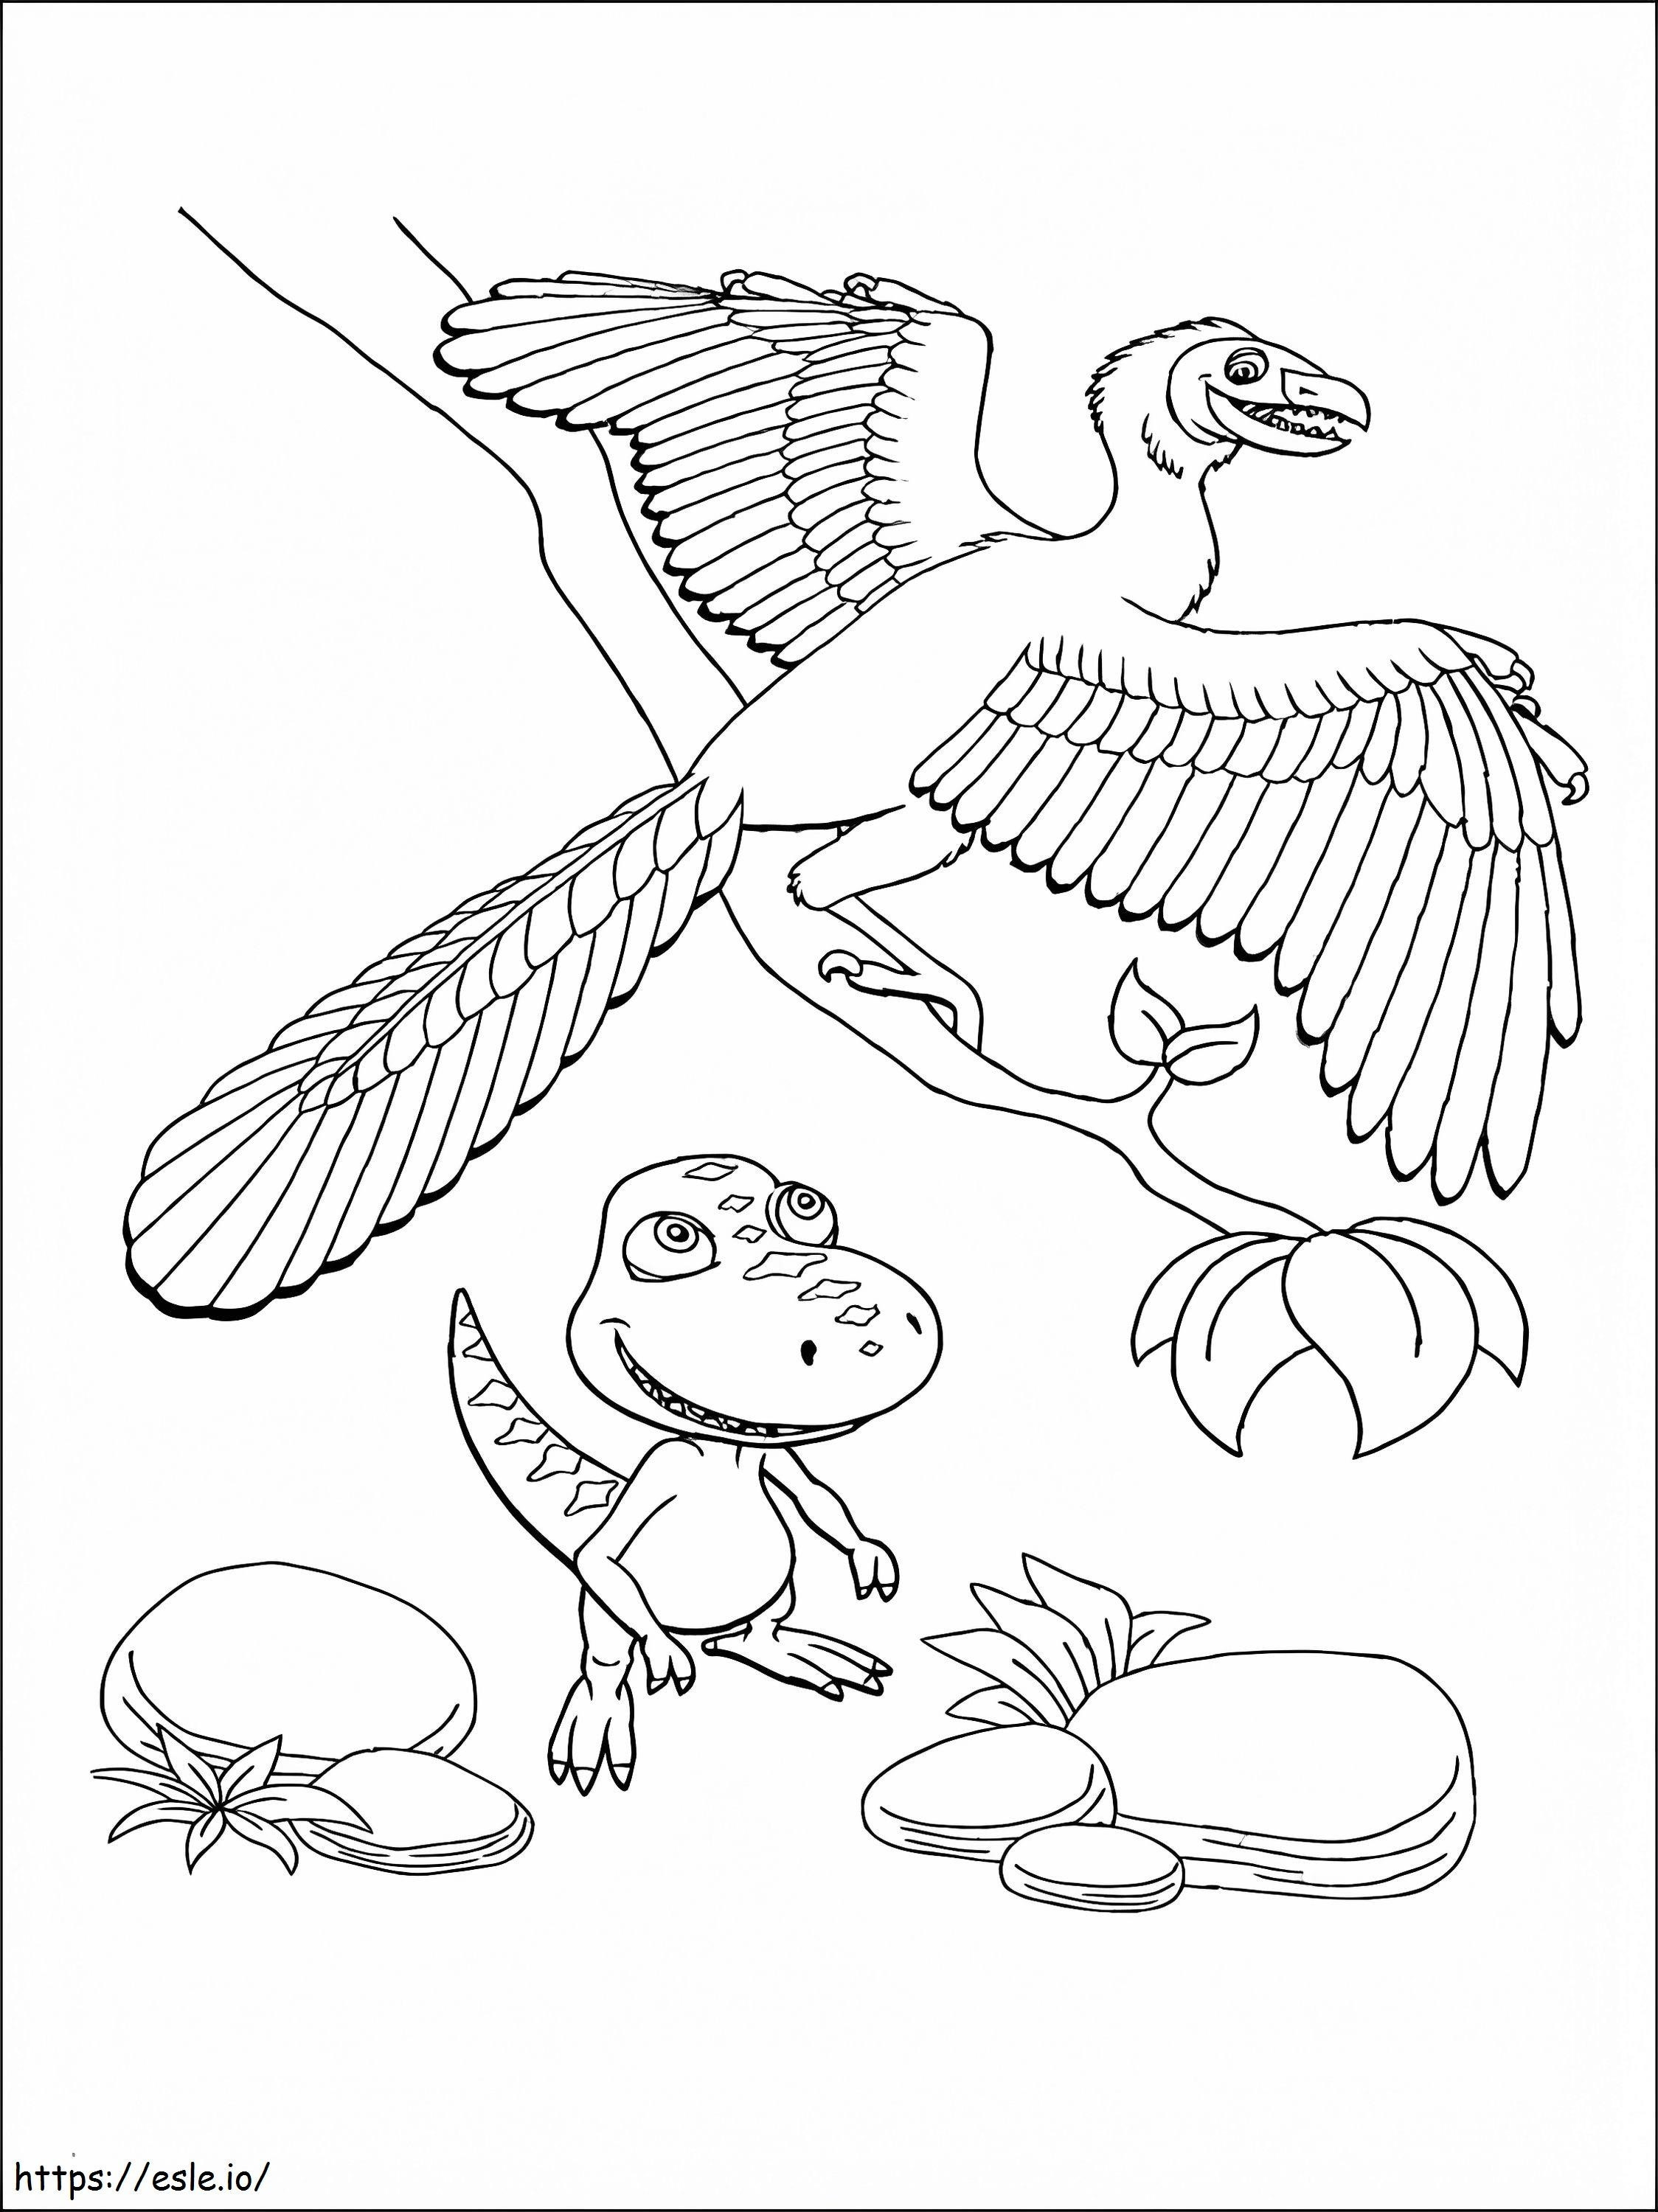 Dinosaur Flight coloring page